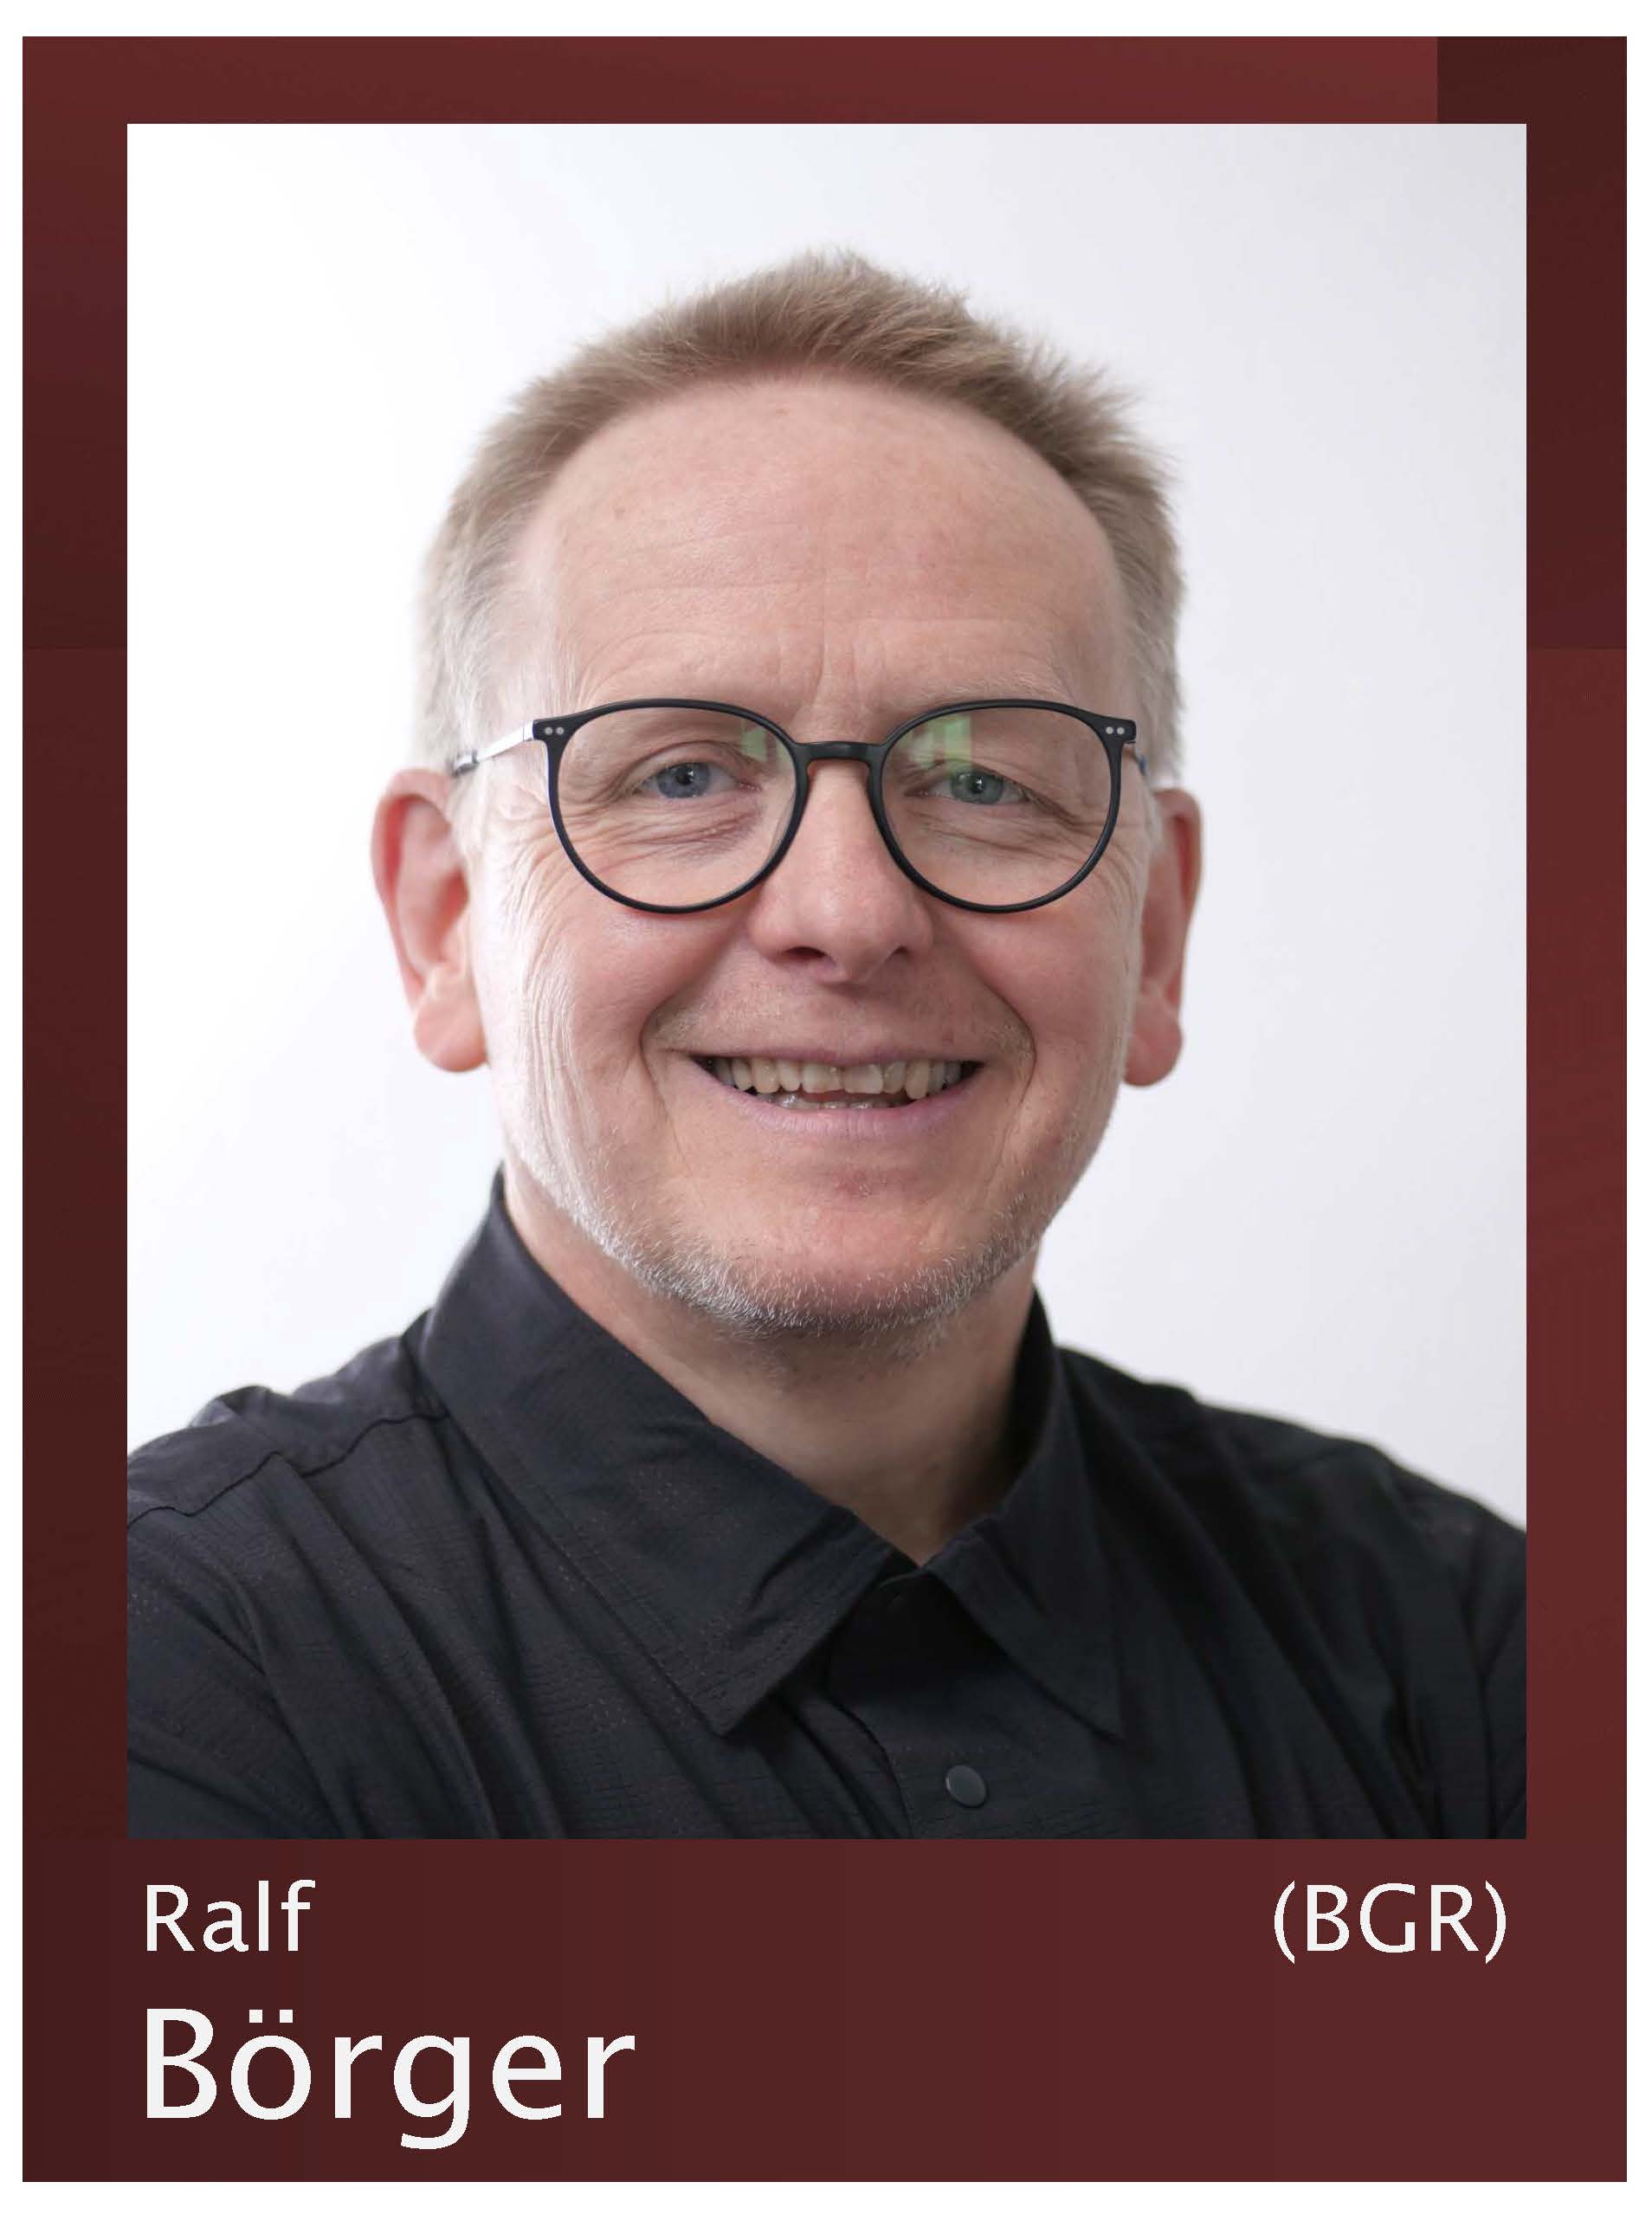 Ralf Boerger